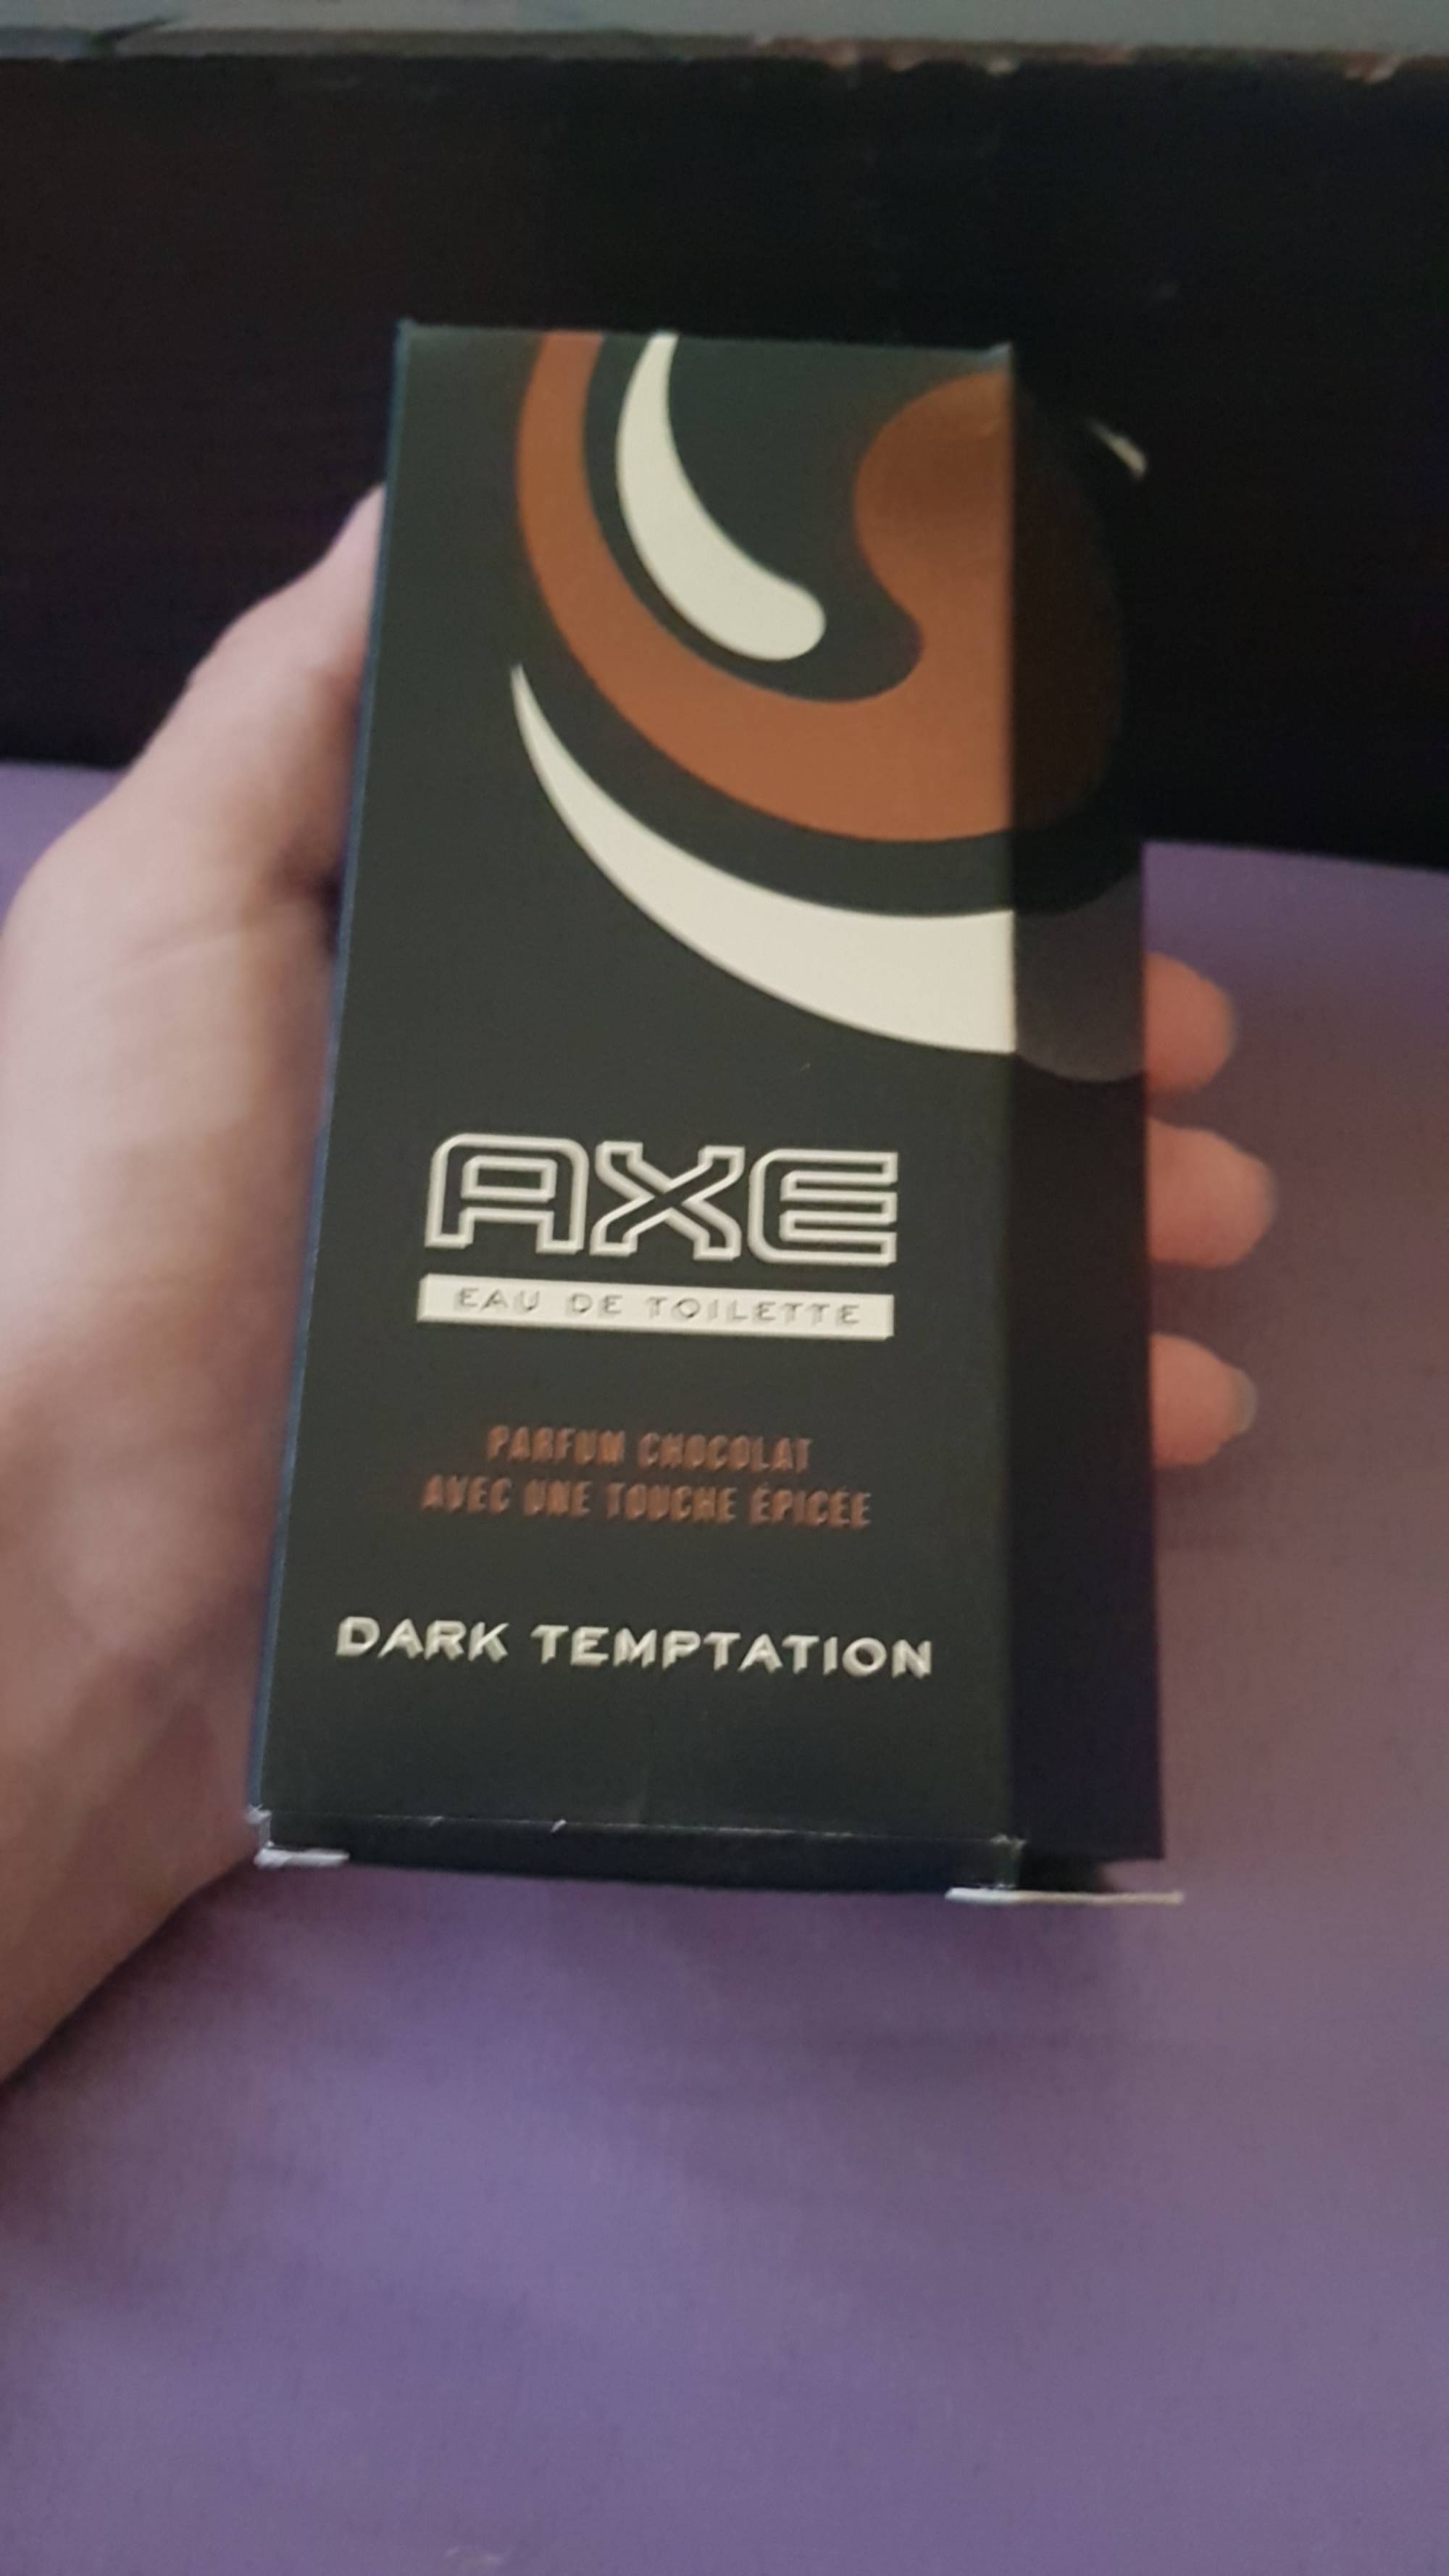 AXE - Dark temptation - Eau de toilette parfum chocolat